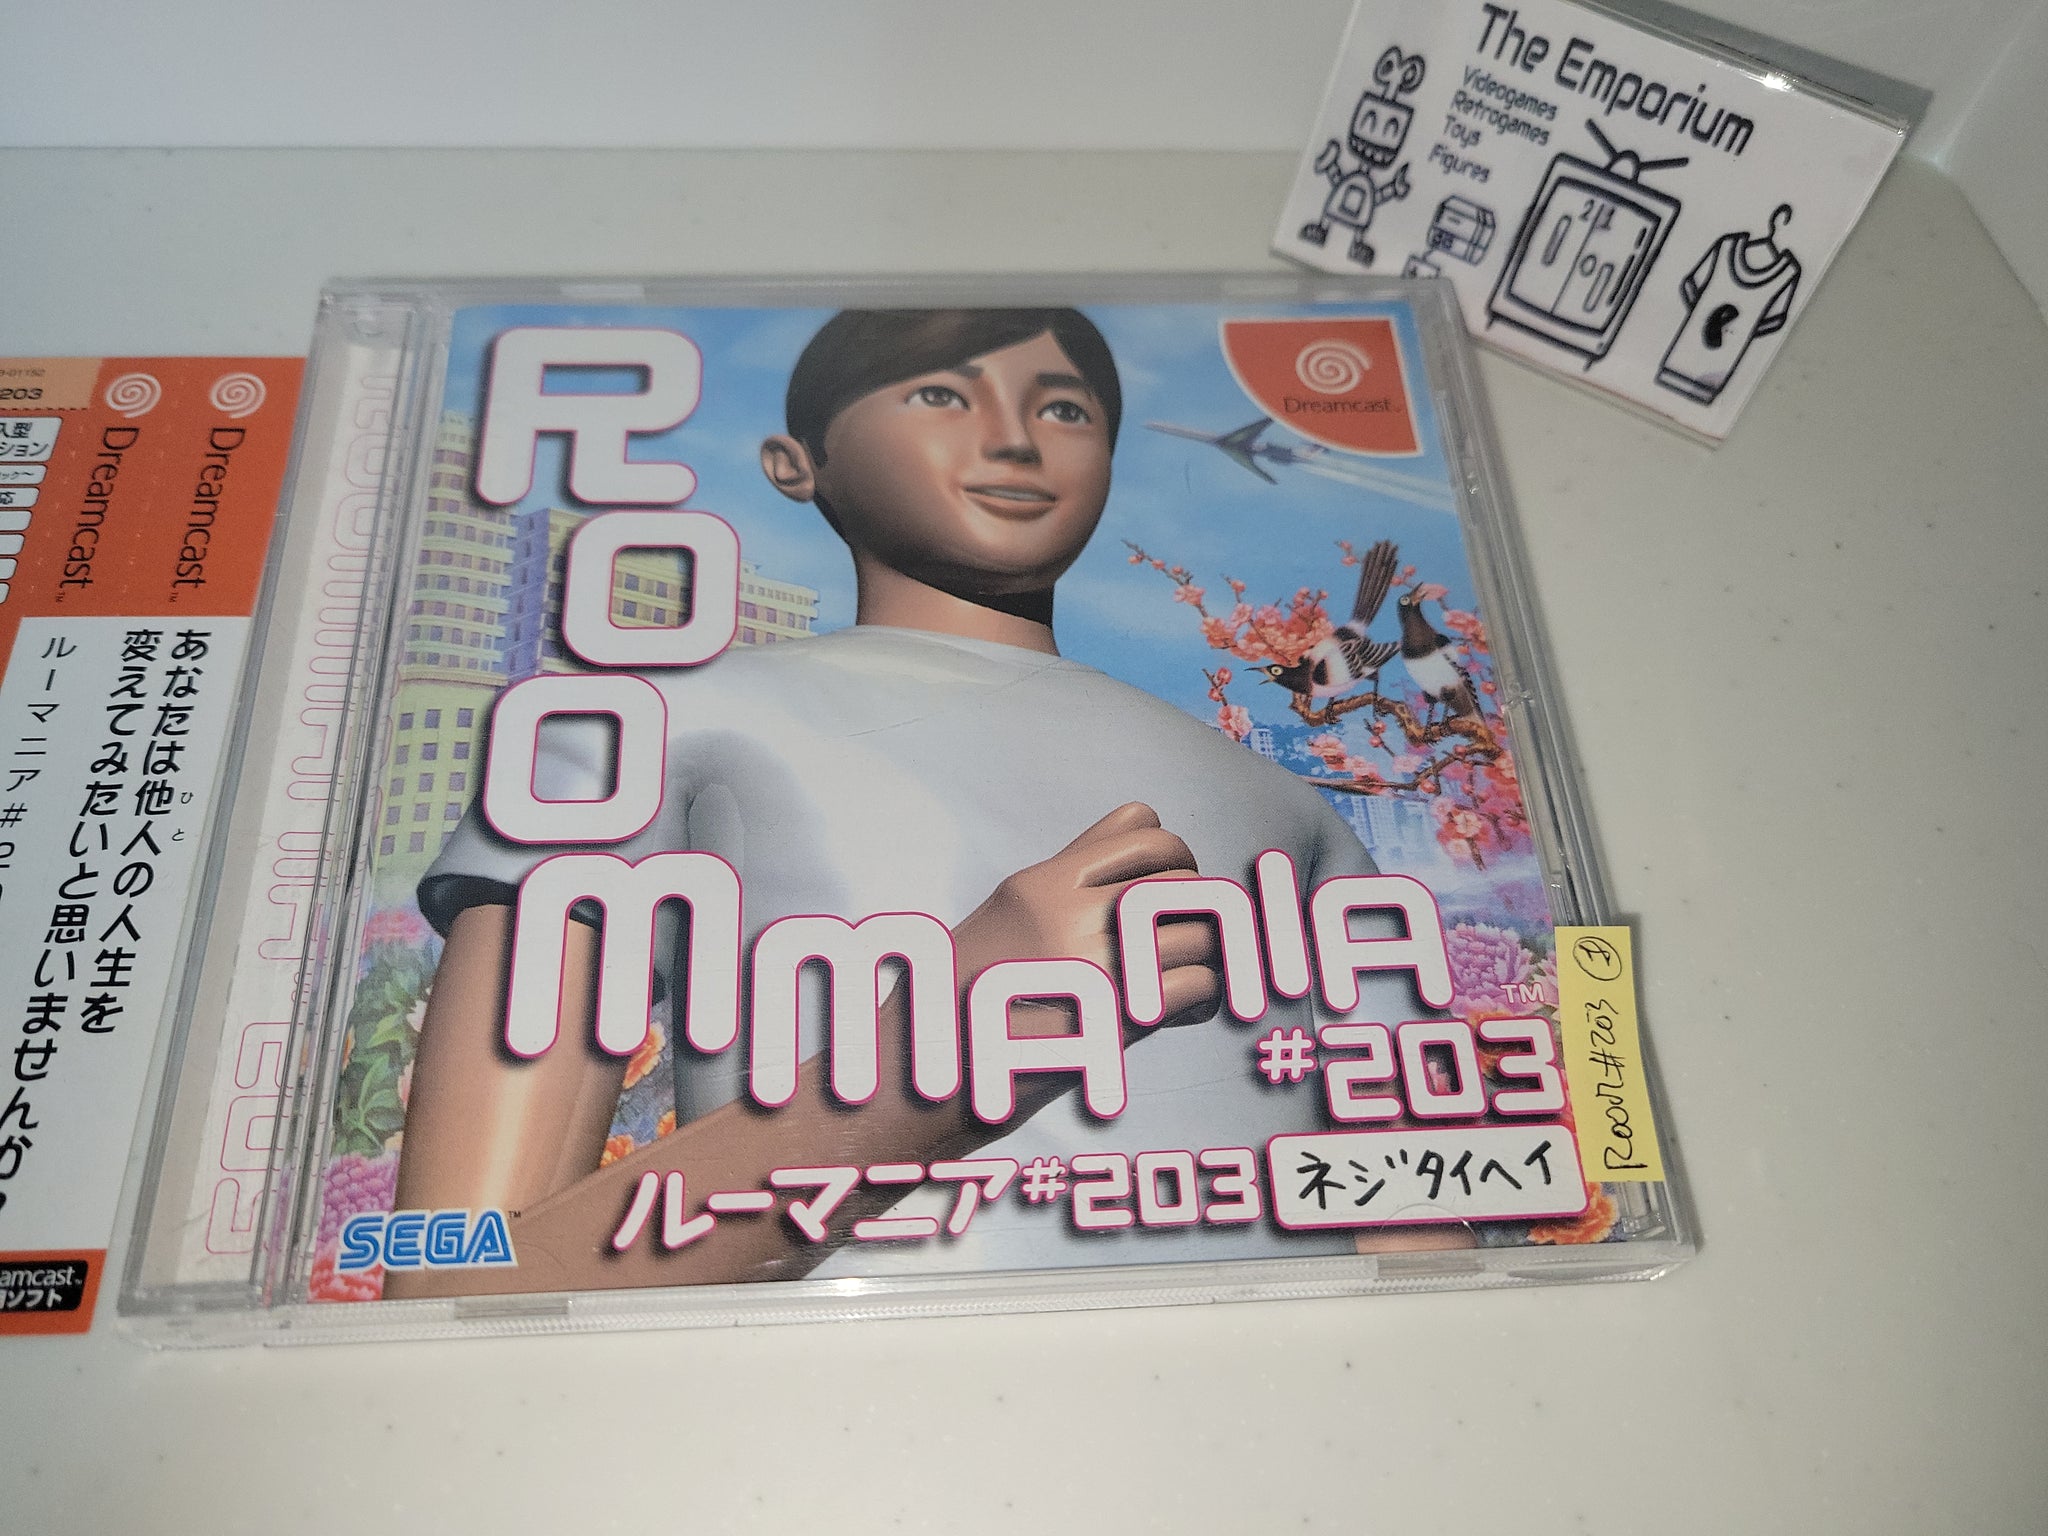 RoomMania #203 - Sega dc Dreamcast